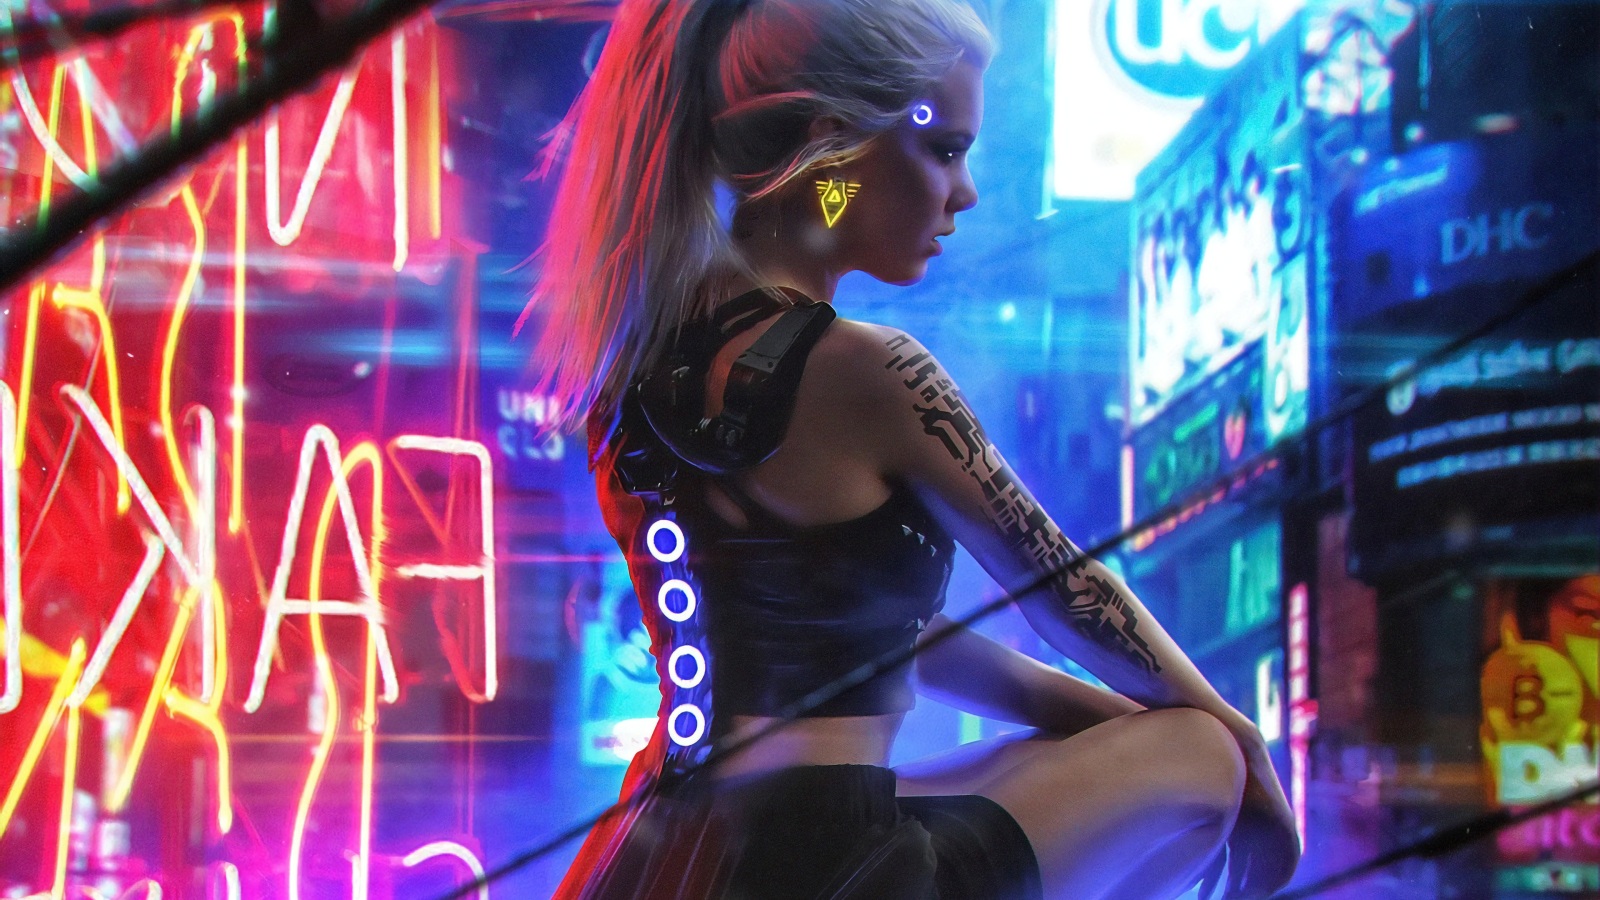 Wallpaper k cyberpunk neon girl wallpaper